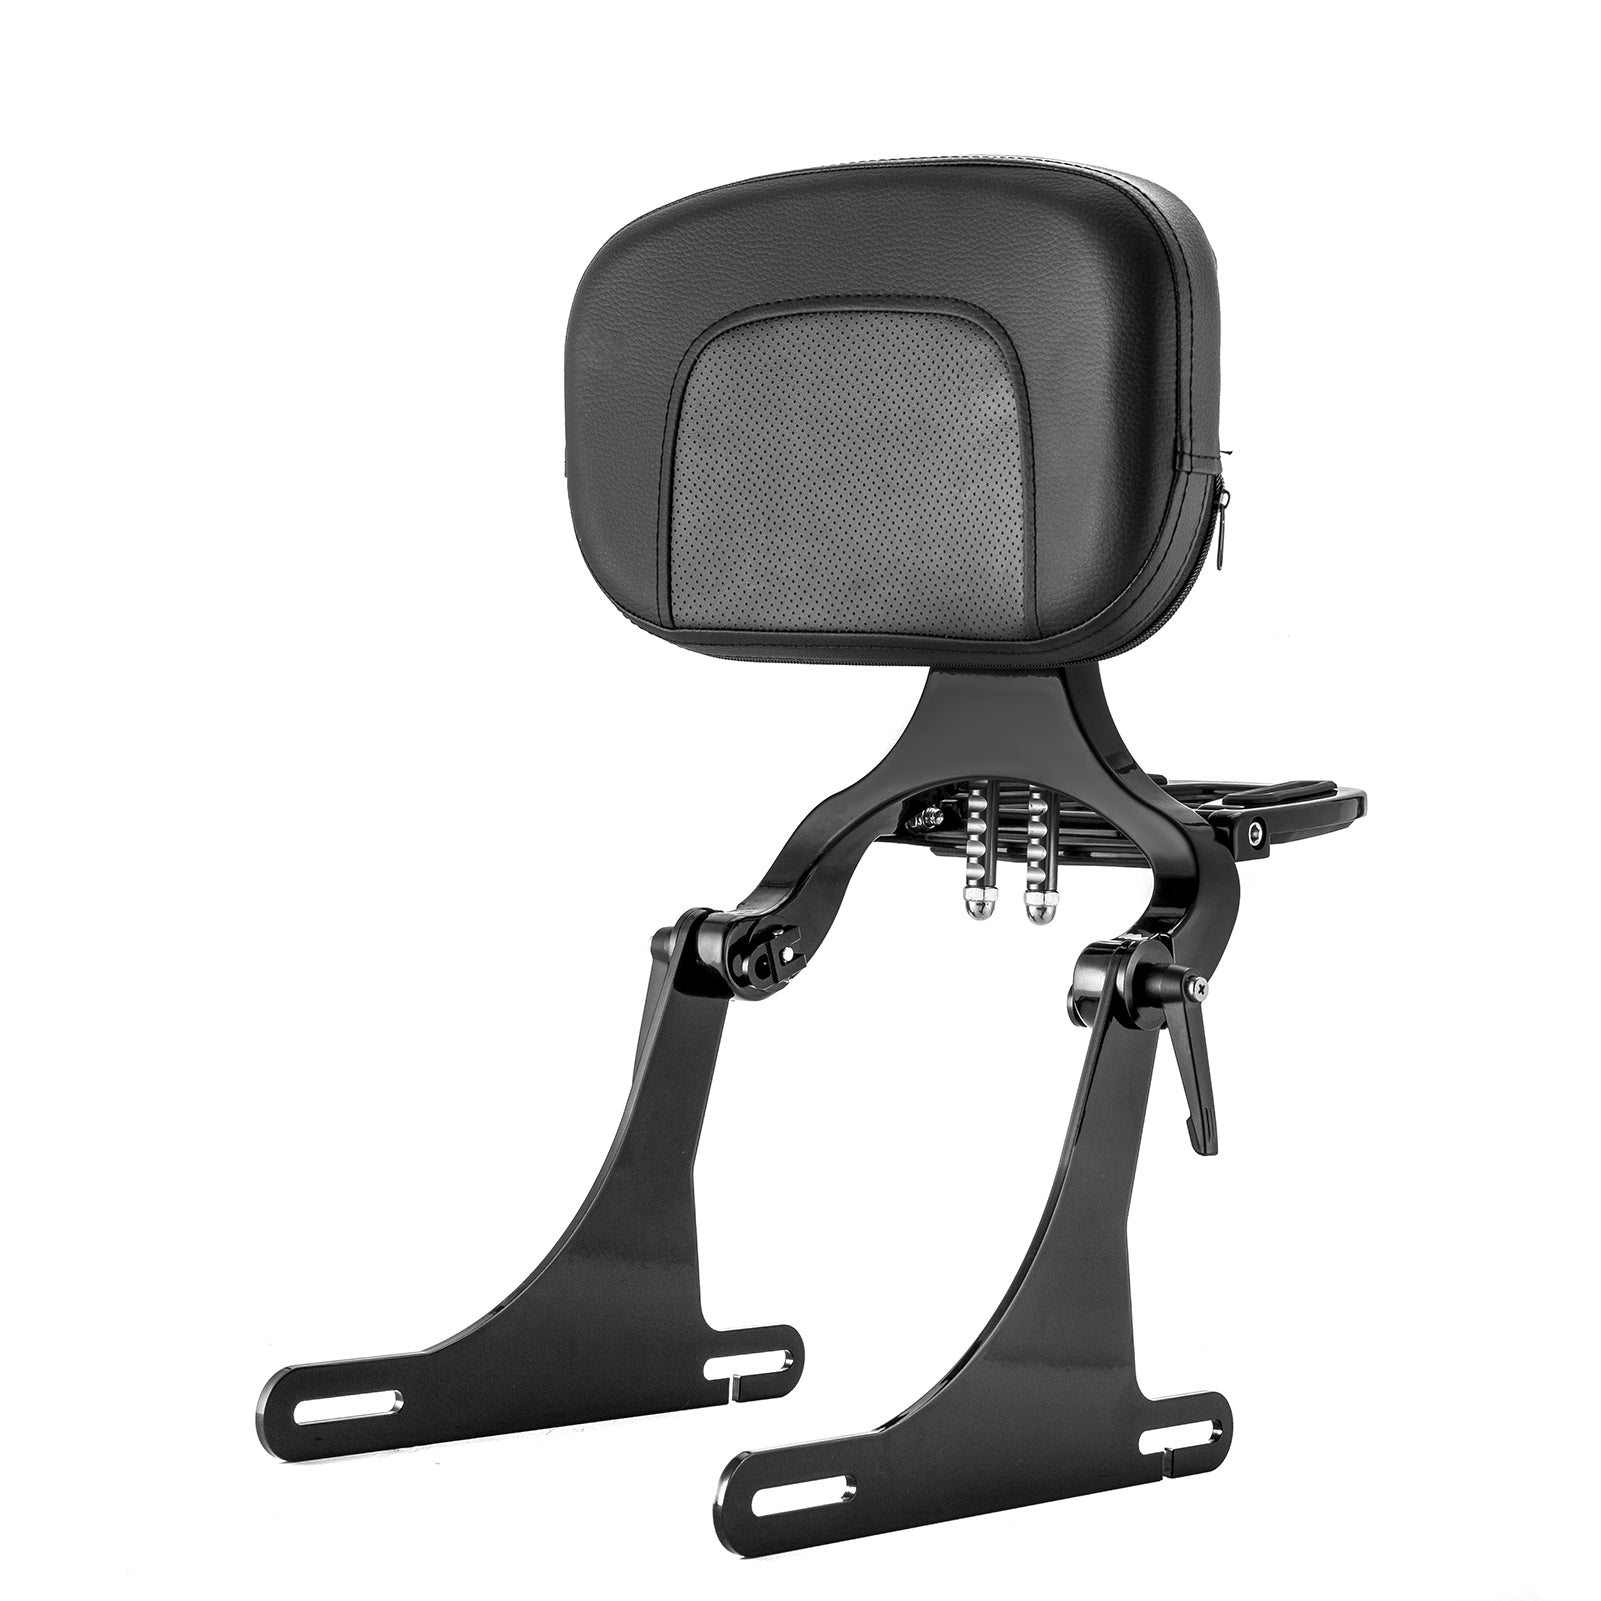 2016-2017 Dyna Low Rider FXDLS Street Bob FXDB Gloss Black Multi-Purpose Adjustable Backrest